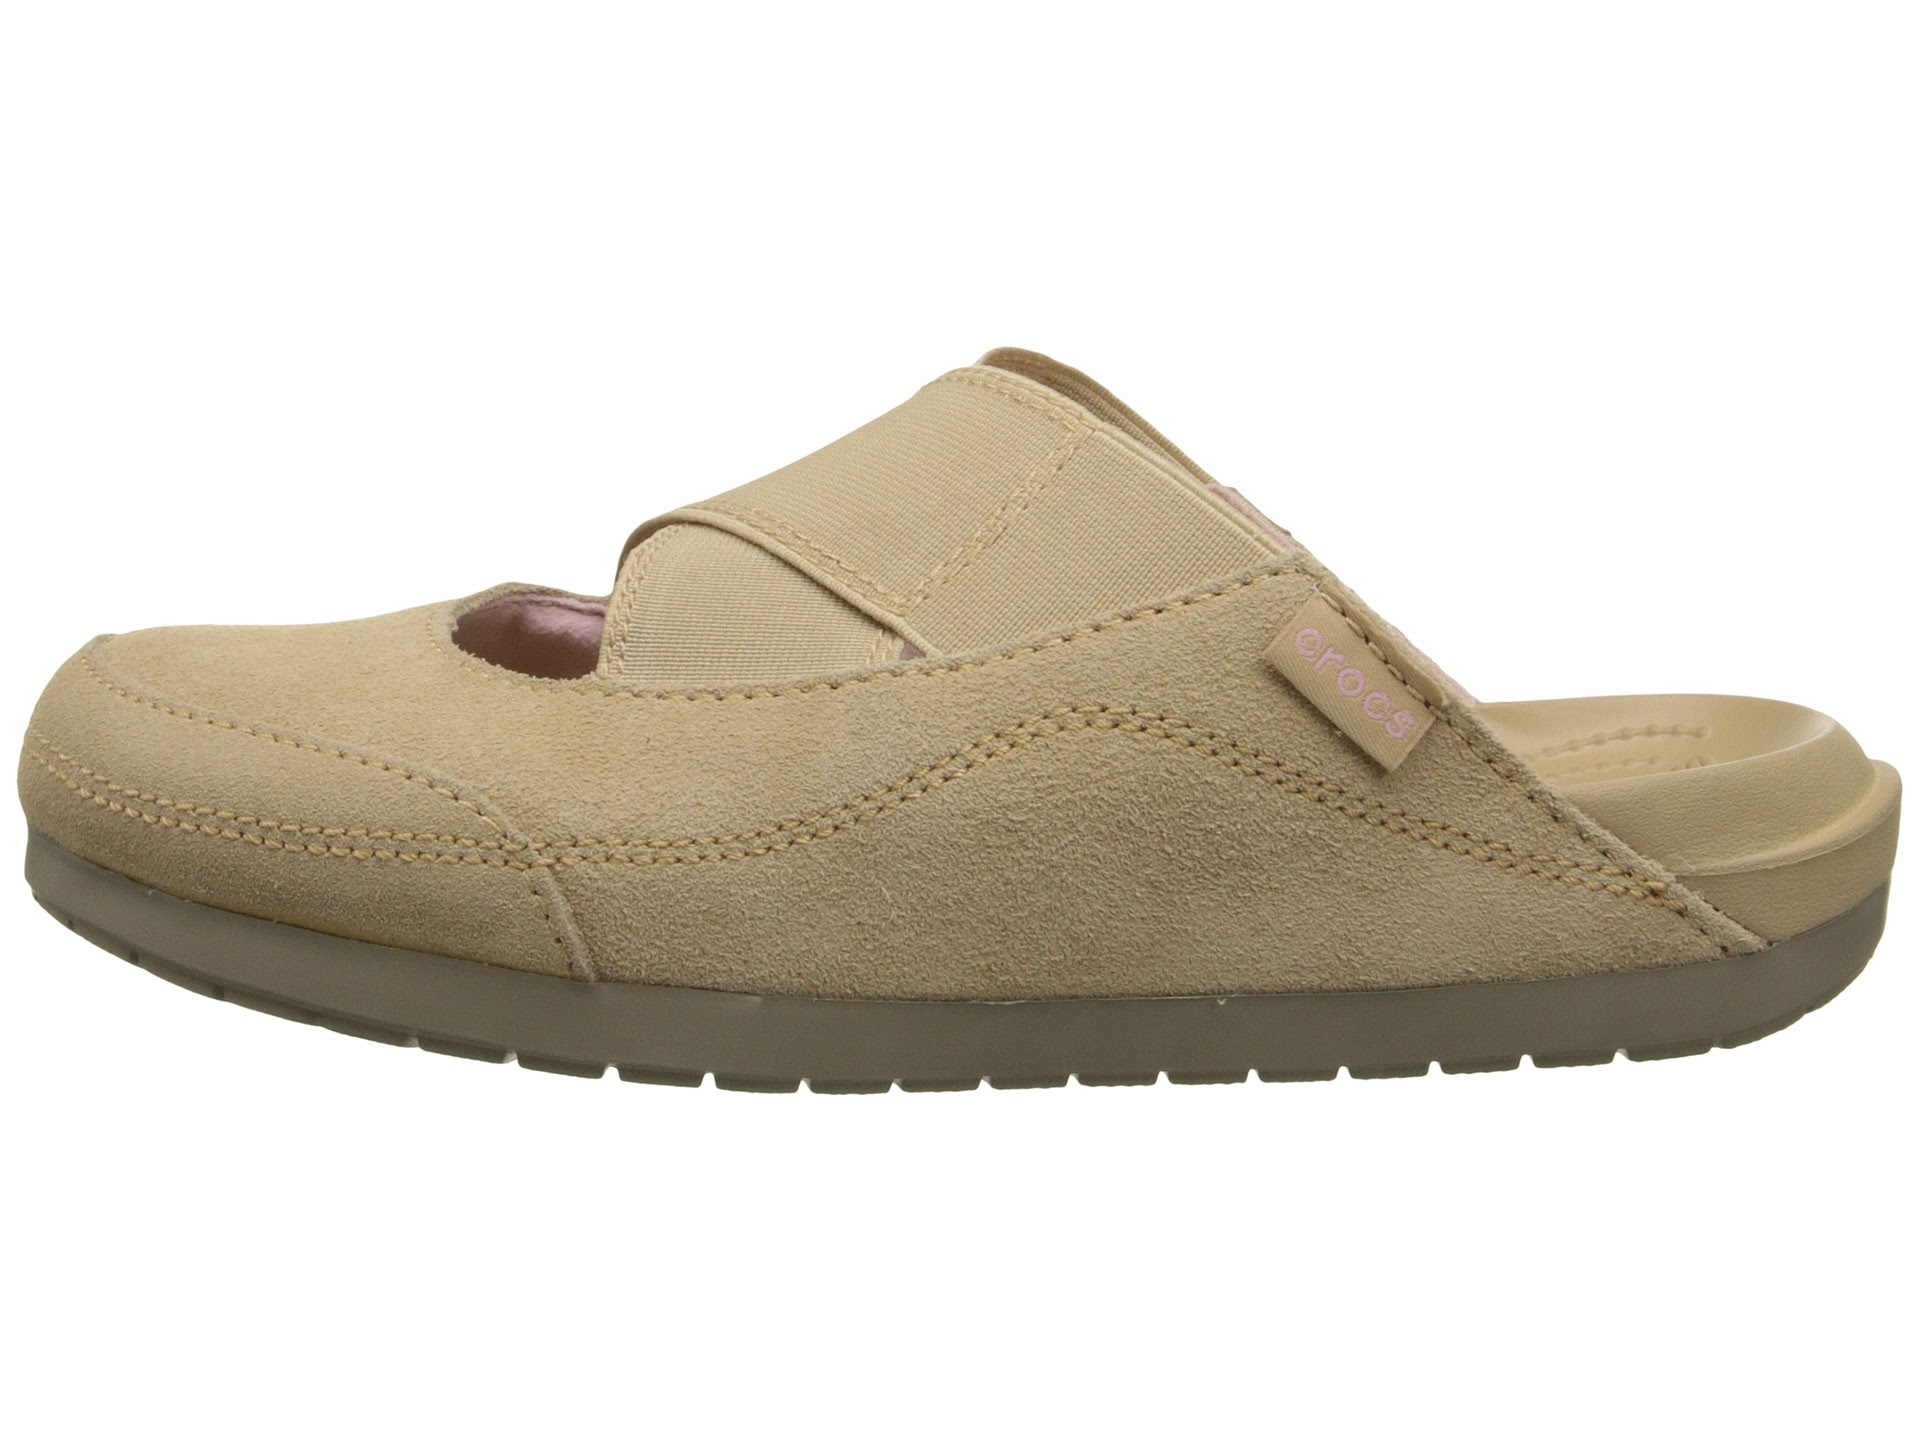 Crocs Crocs Edie Mule, Shoes | Shipped Free at Zappos